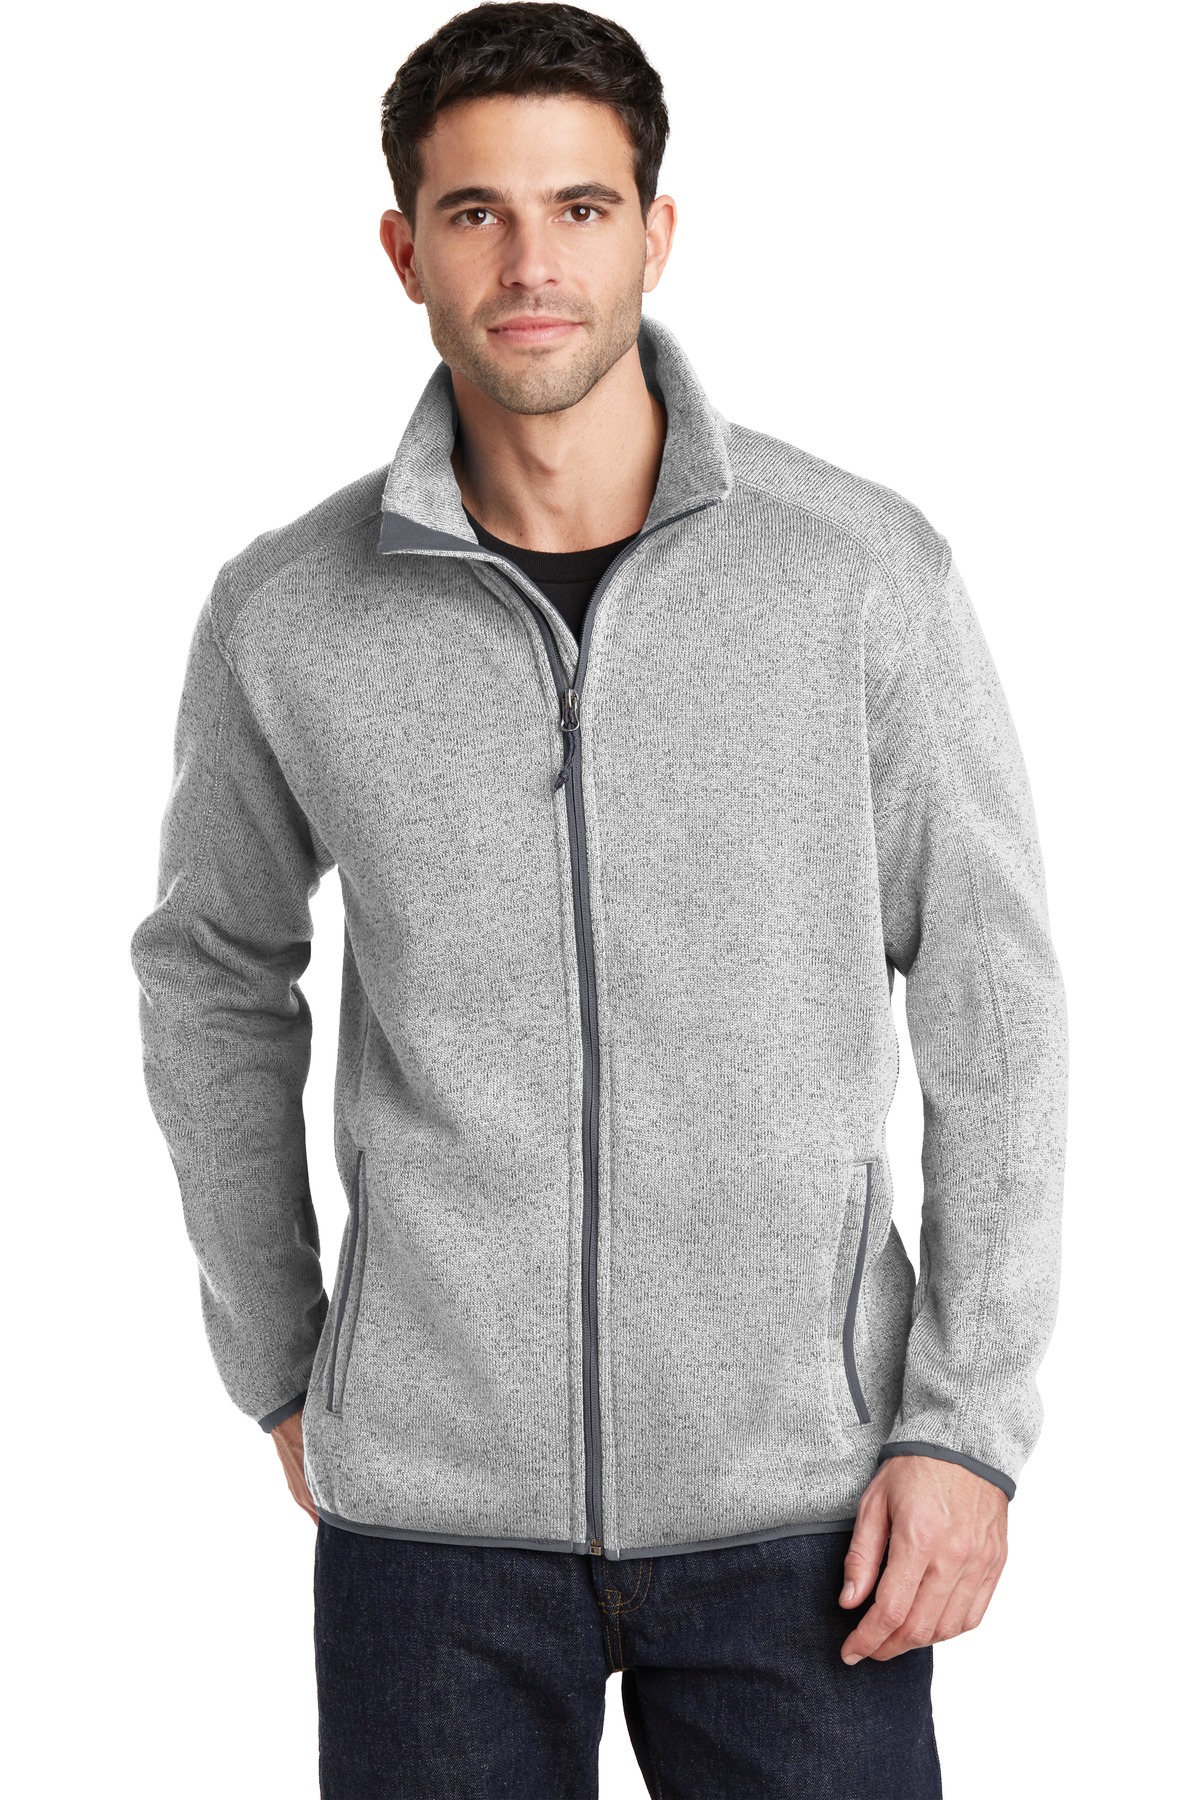 Port Authority F232 - Sweater Fleece Jacket - Outerwear